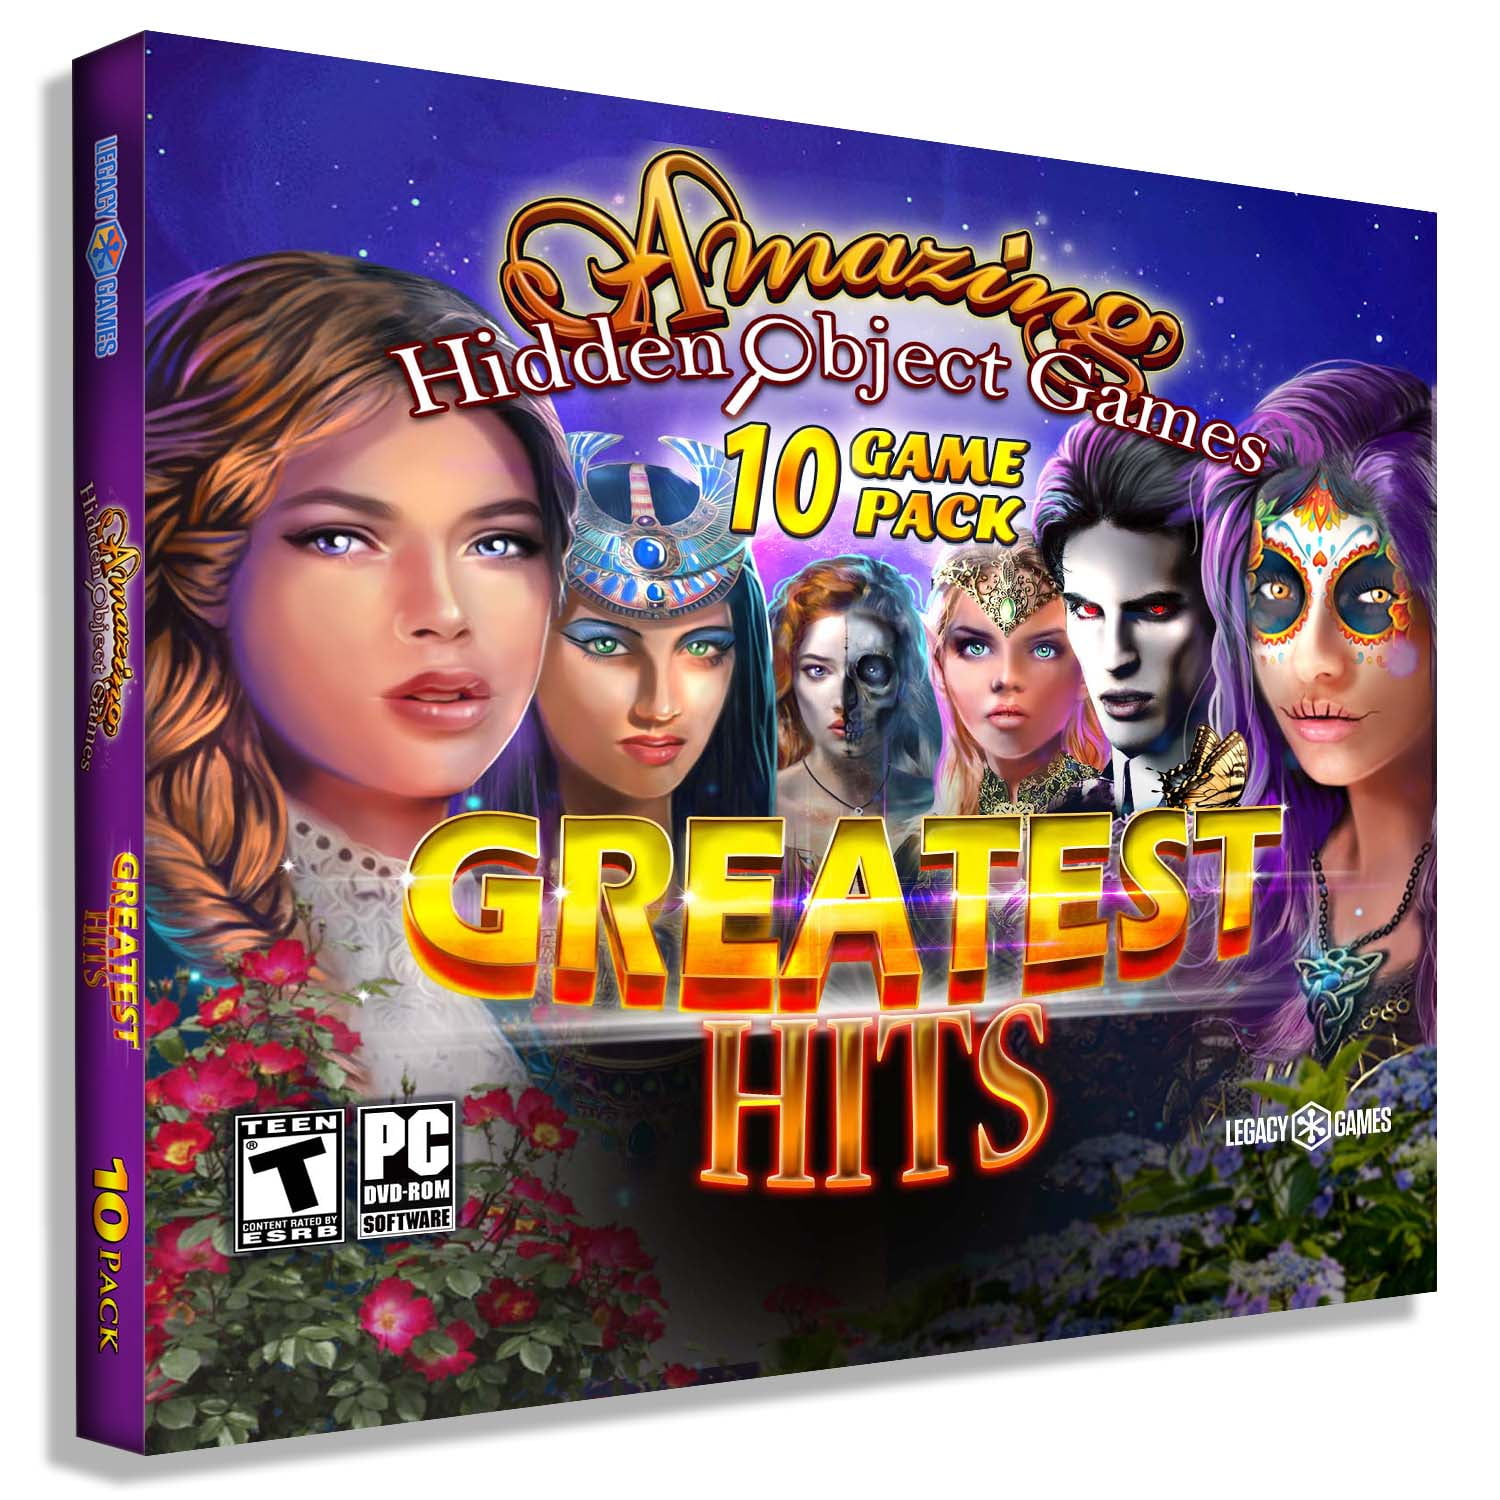 Hidden Object Games: Greatest Hits - 10 Pack - Walmart.com